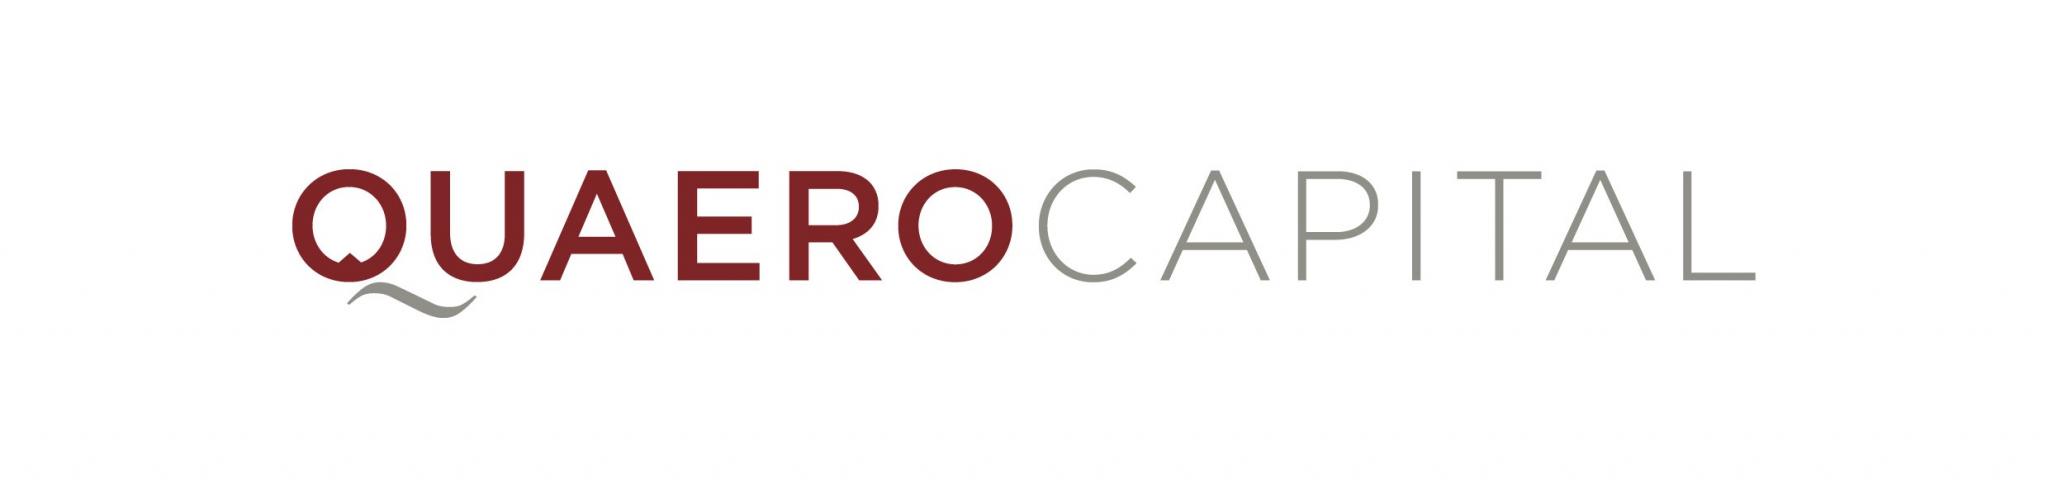 Logo-Quaero-Capital